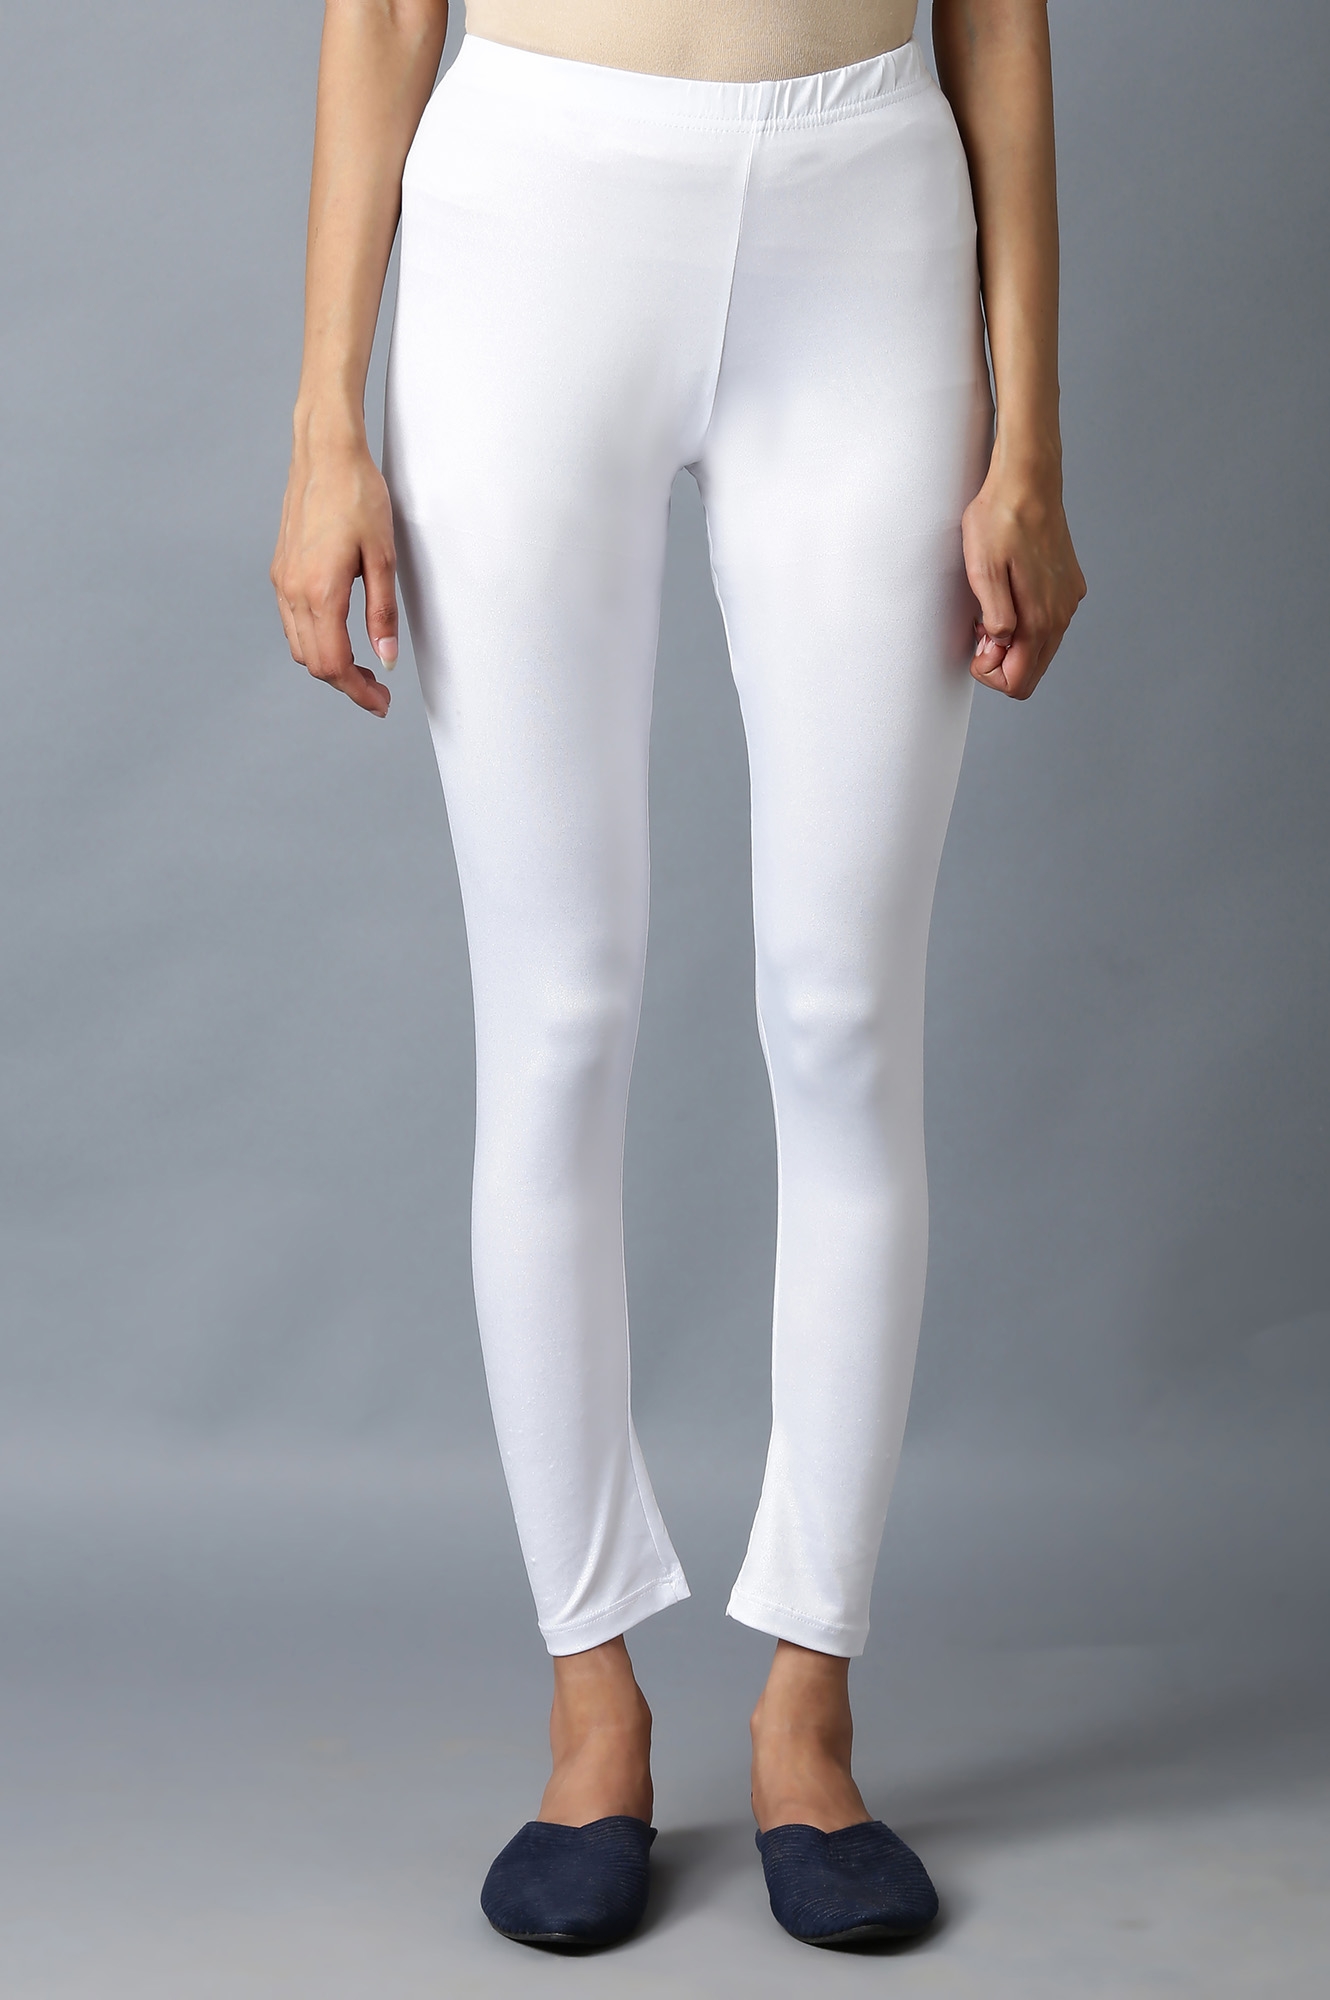 Shimmer White Snug Fit Tights